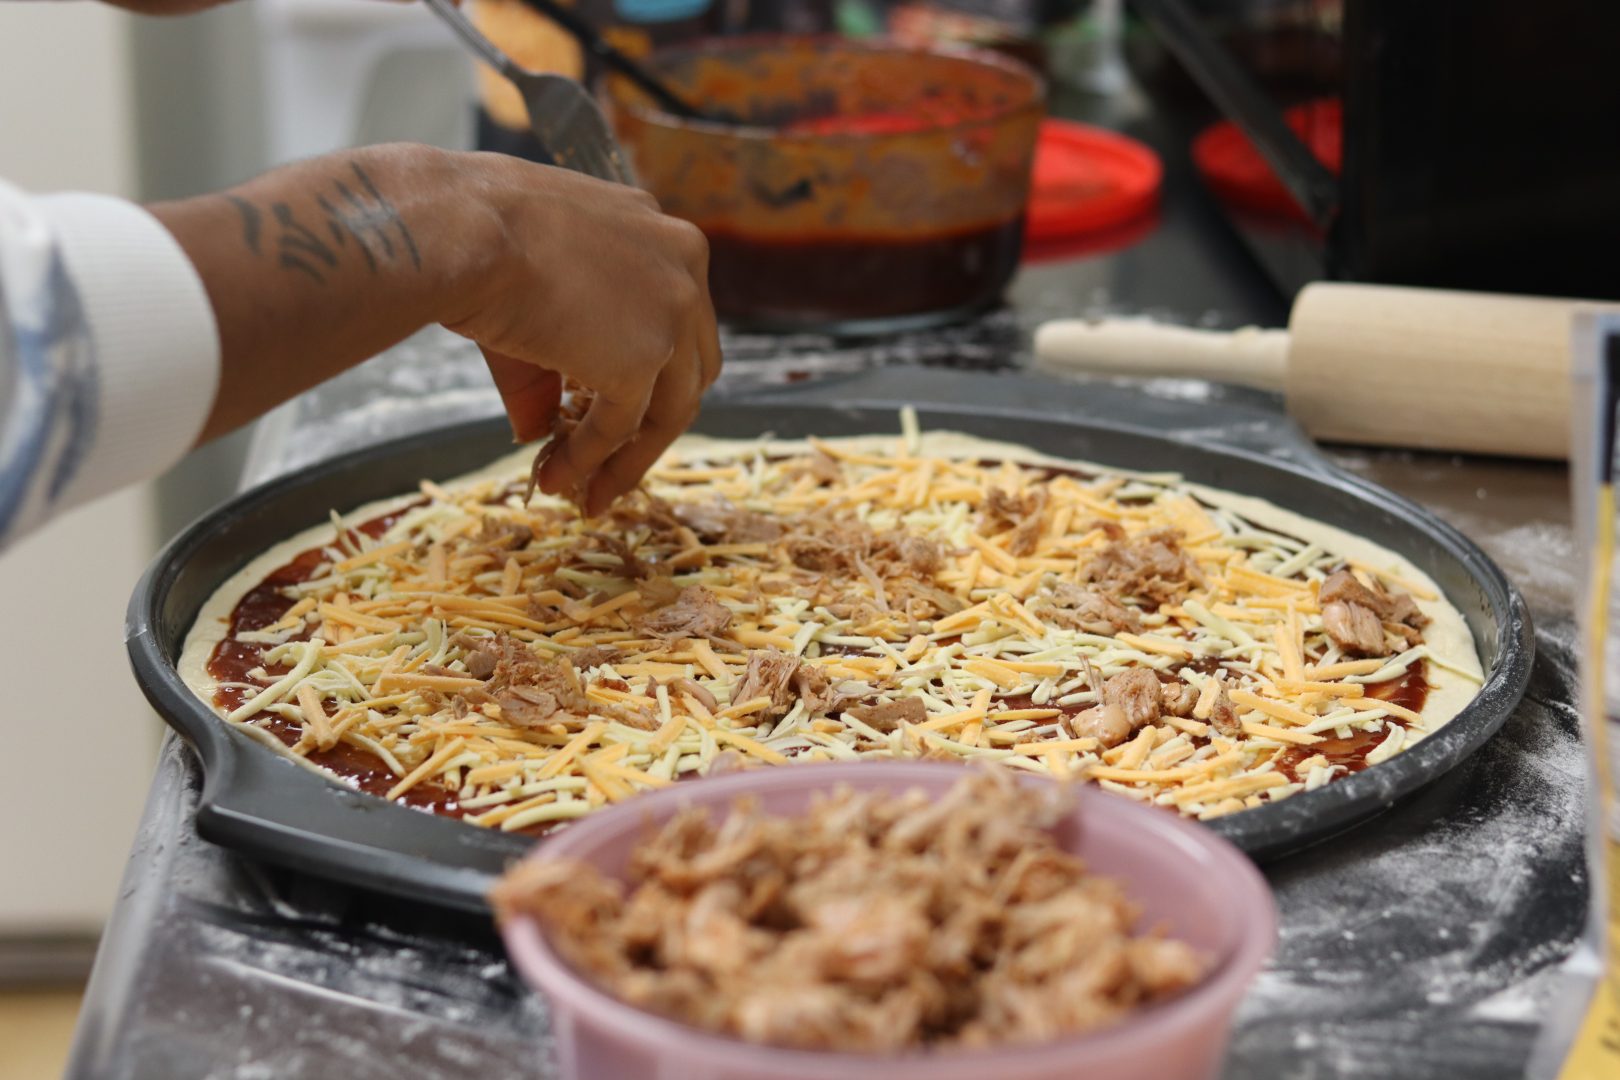 Daijah, Community Cook. Hand sprinkling vegan cheese on pizza.